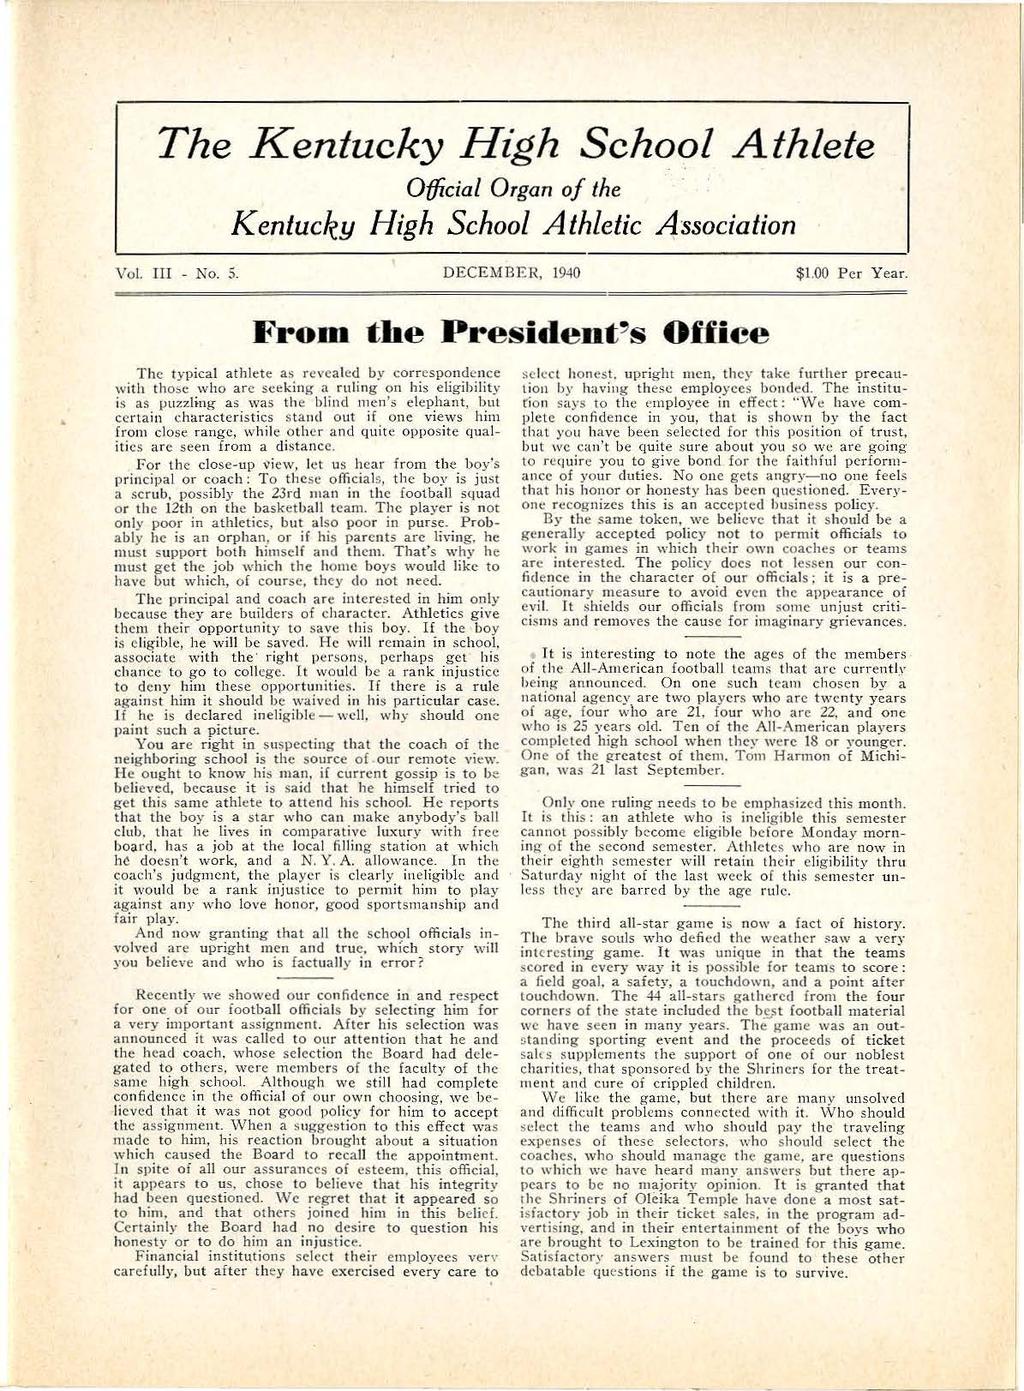 The Kentucky Hgh SchoC?l Athlete Offcal Organ of the Kentucky Hgh School Athletc Assocaton Vol. - No. 5. DECEMBEn, 194 $1. Per Year.